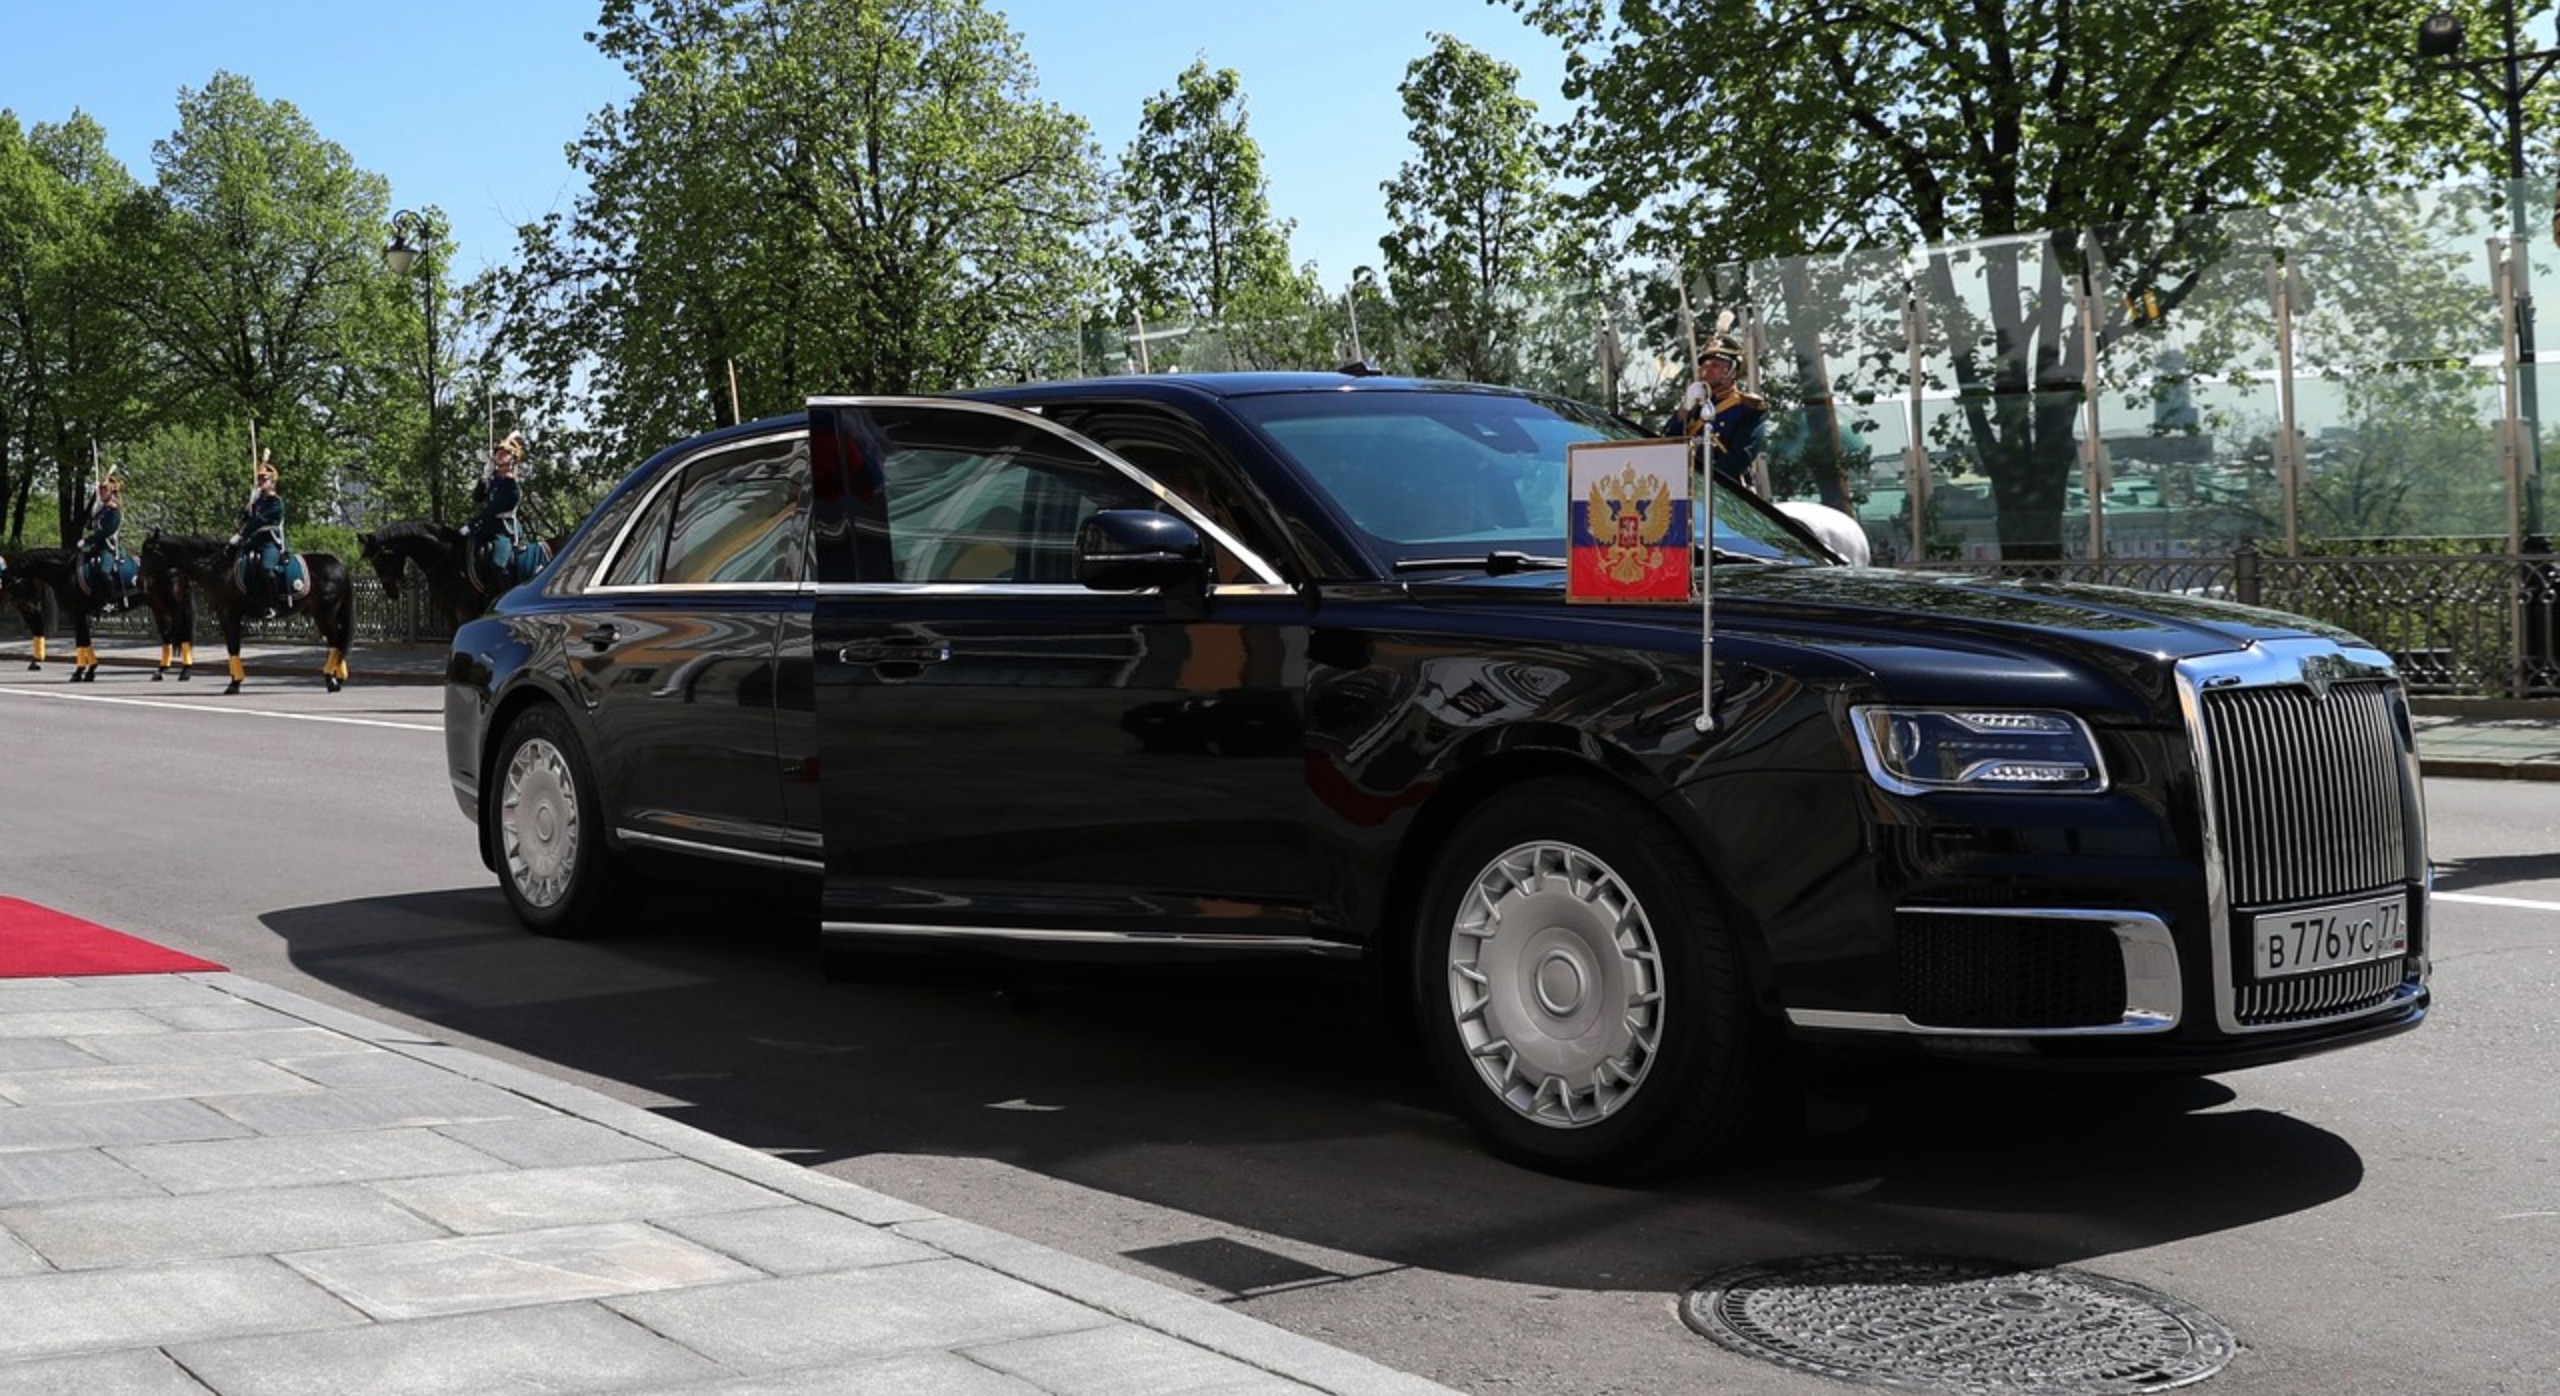 Президентский автомобиль. Аурус лимузин президента. Президентский кортеж Аурус. Машина Путина Аурус.